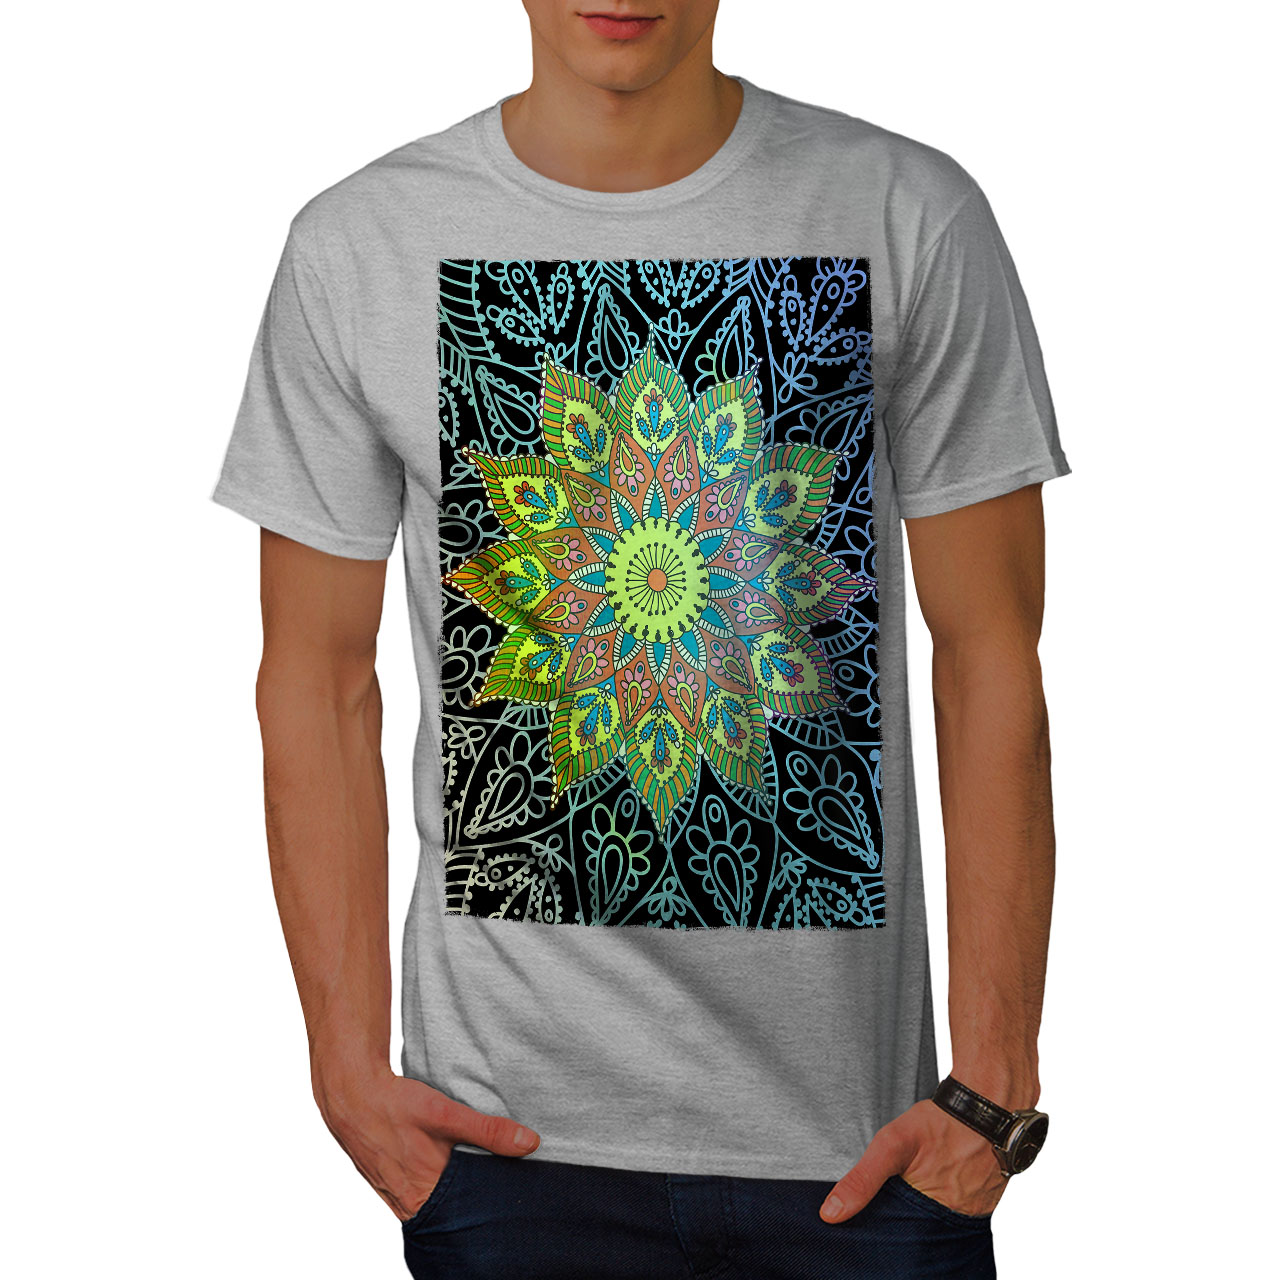 Wellcoda Mandala Mens T-shirt Fashion Art Graphic Design Printed Tee 